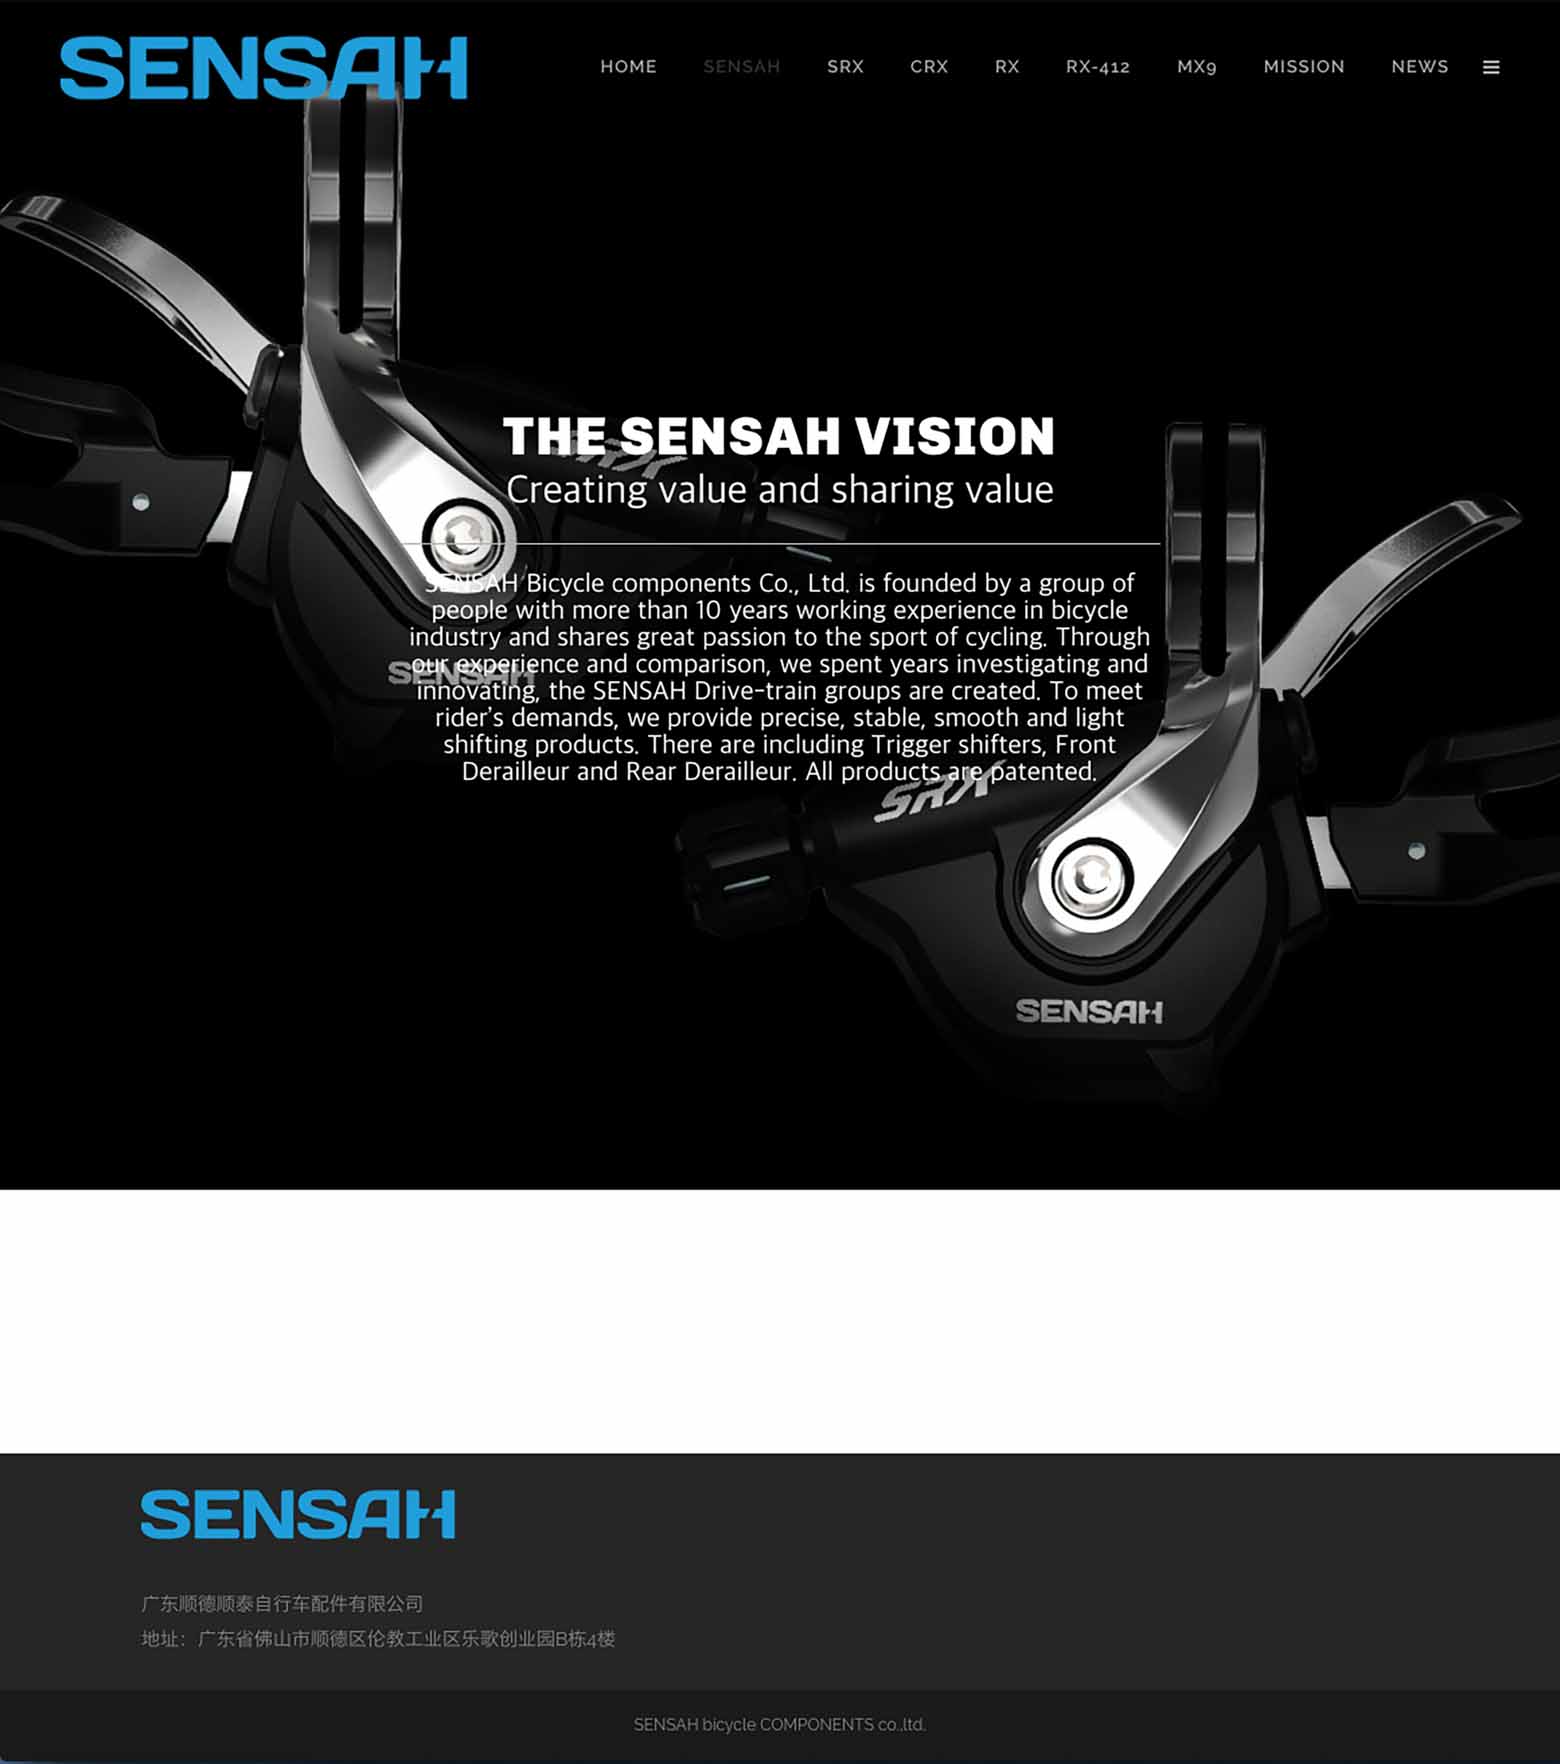 Sensah - web site 2017 image 2 main image